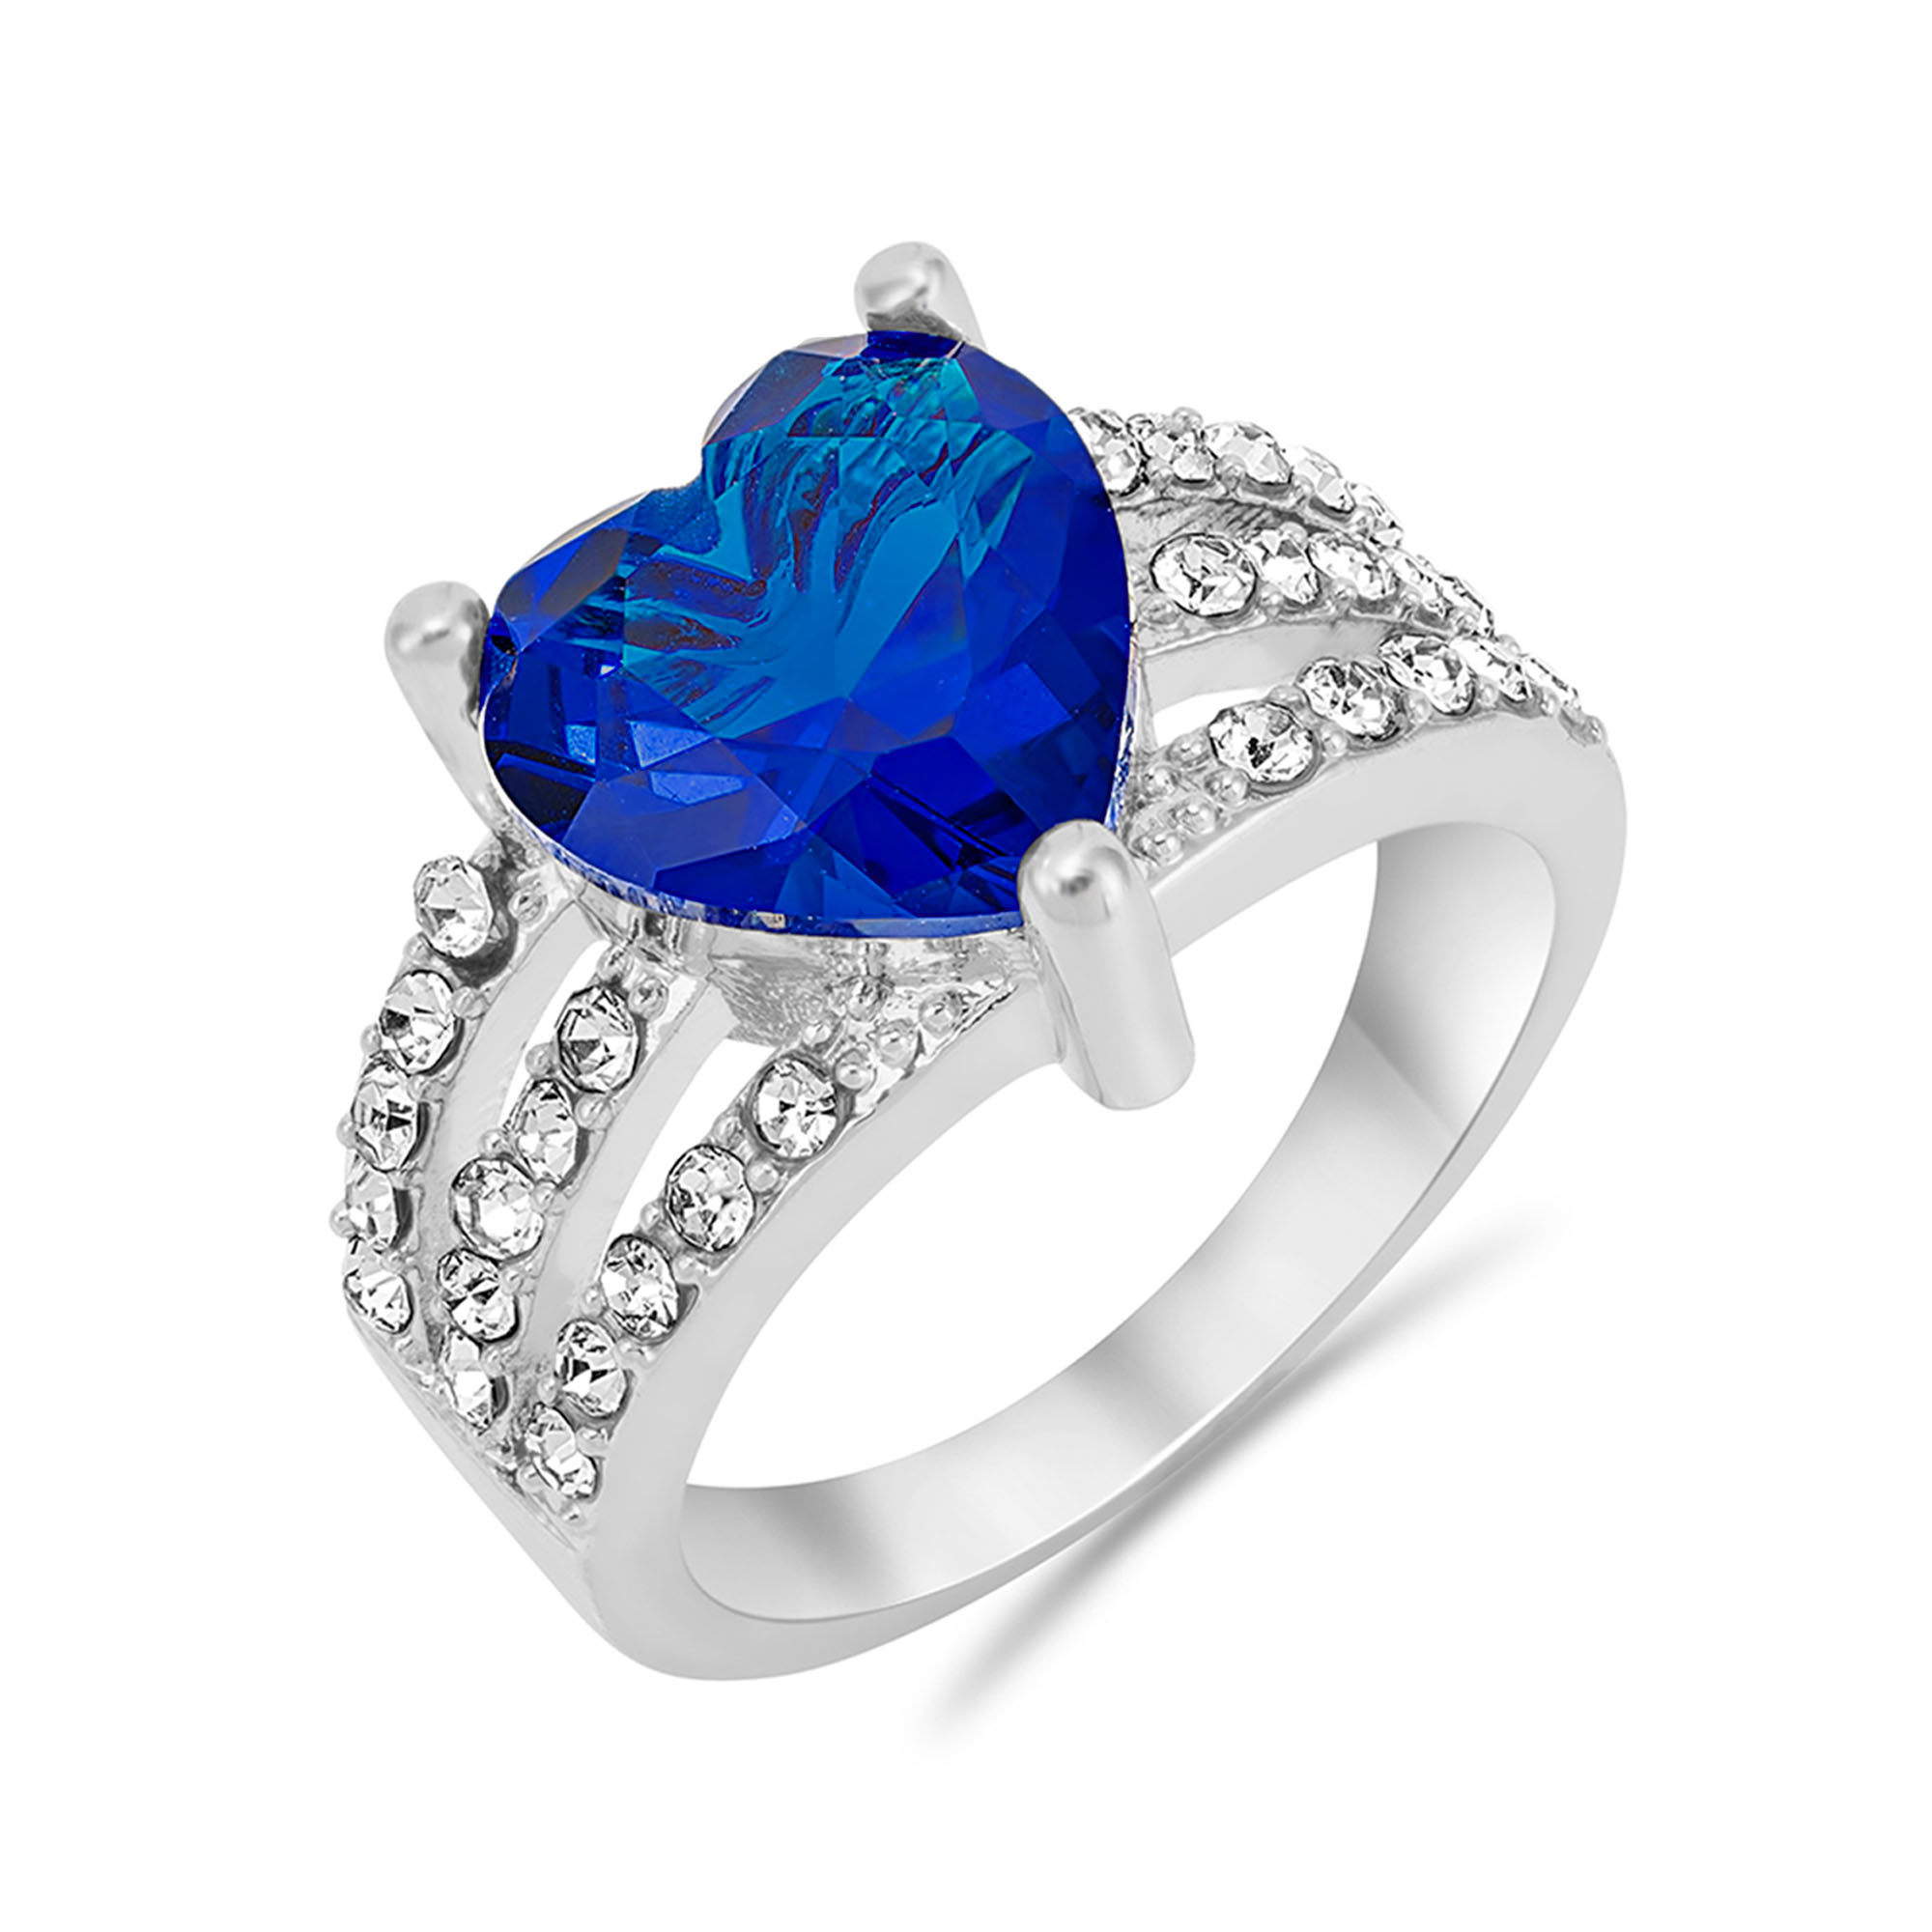 20 x Silver Tone Ring with Blue Cubic Zirconia Heart, 4 Sizes, 5Pcs Per Size| UK SELLER | GCJ010-Blue